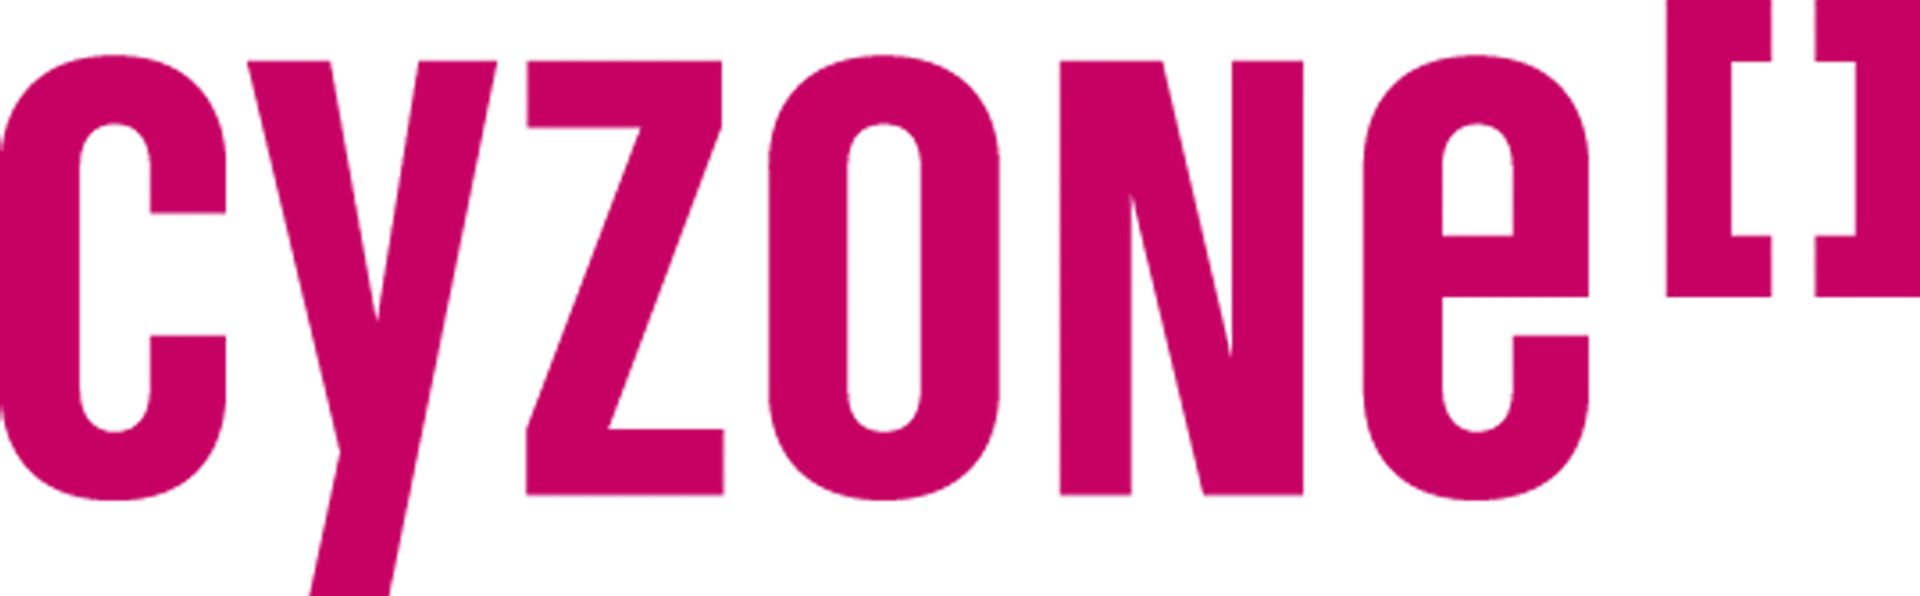 CYZONE logo